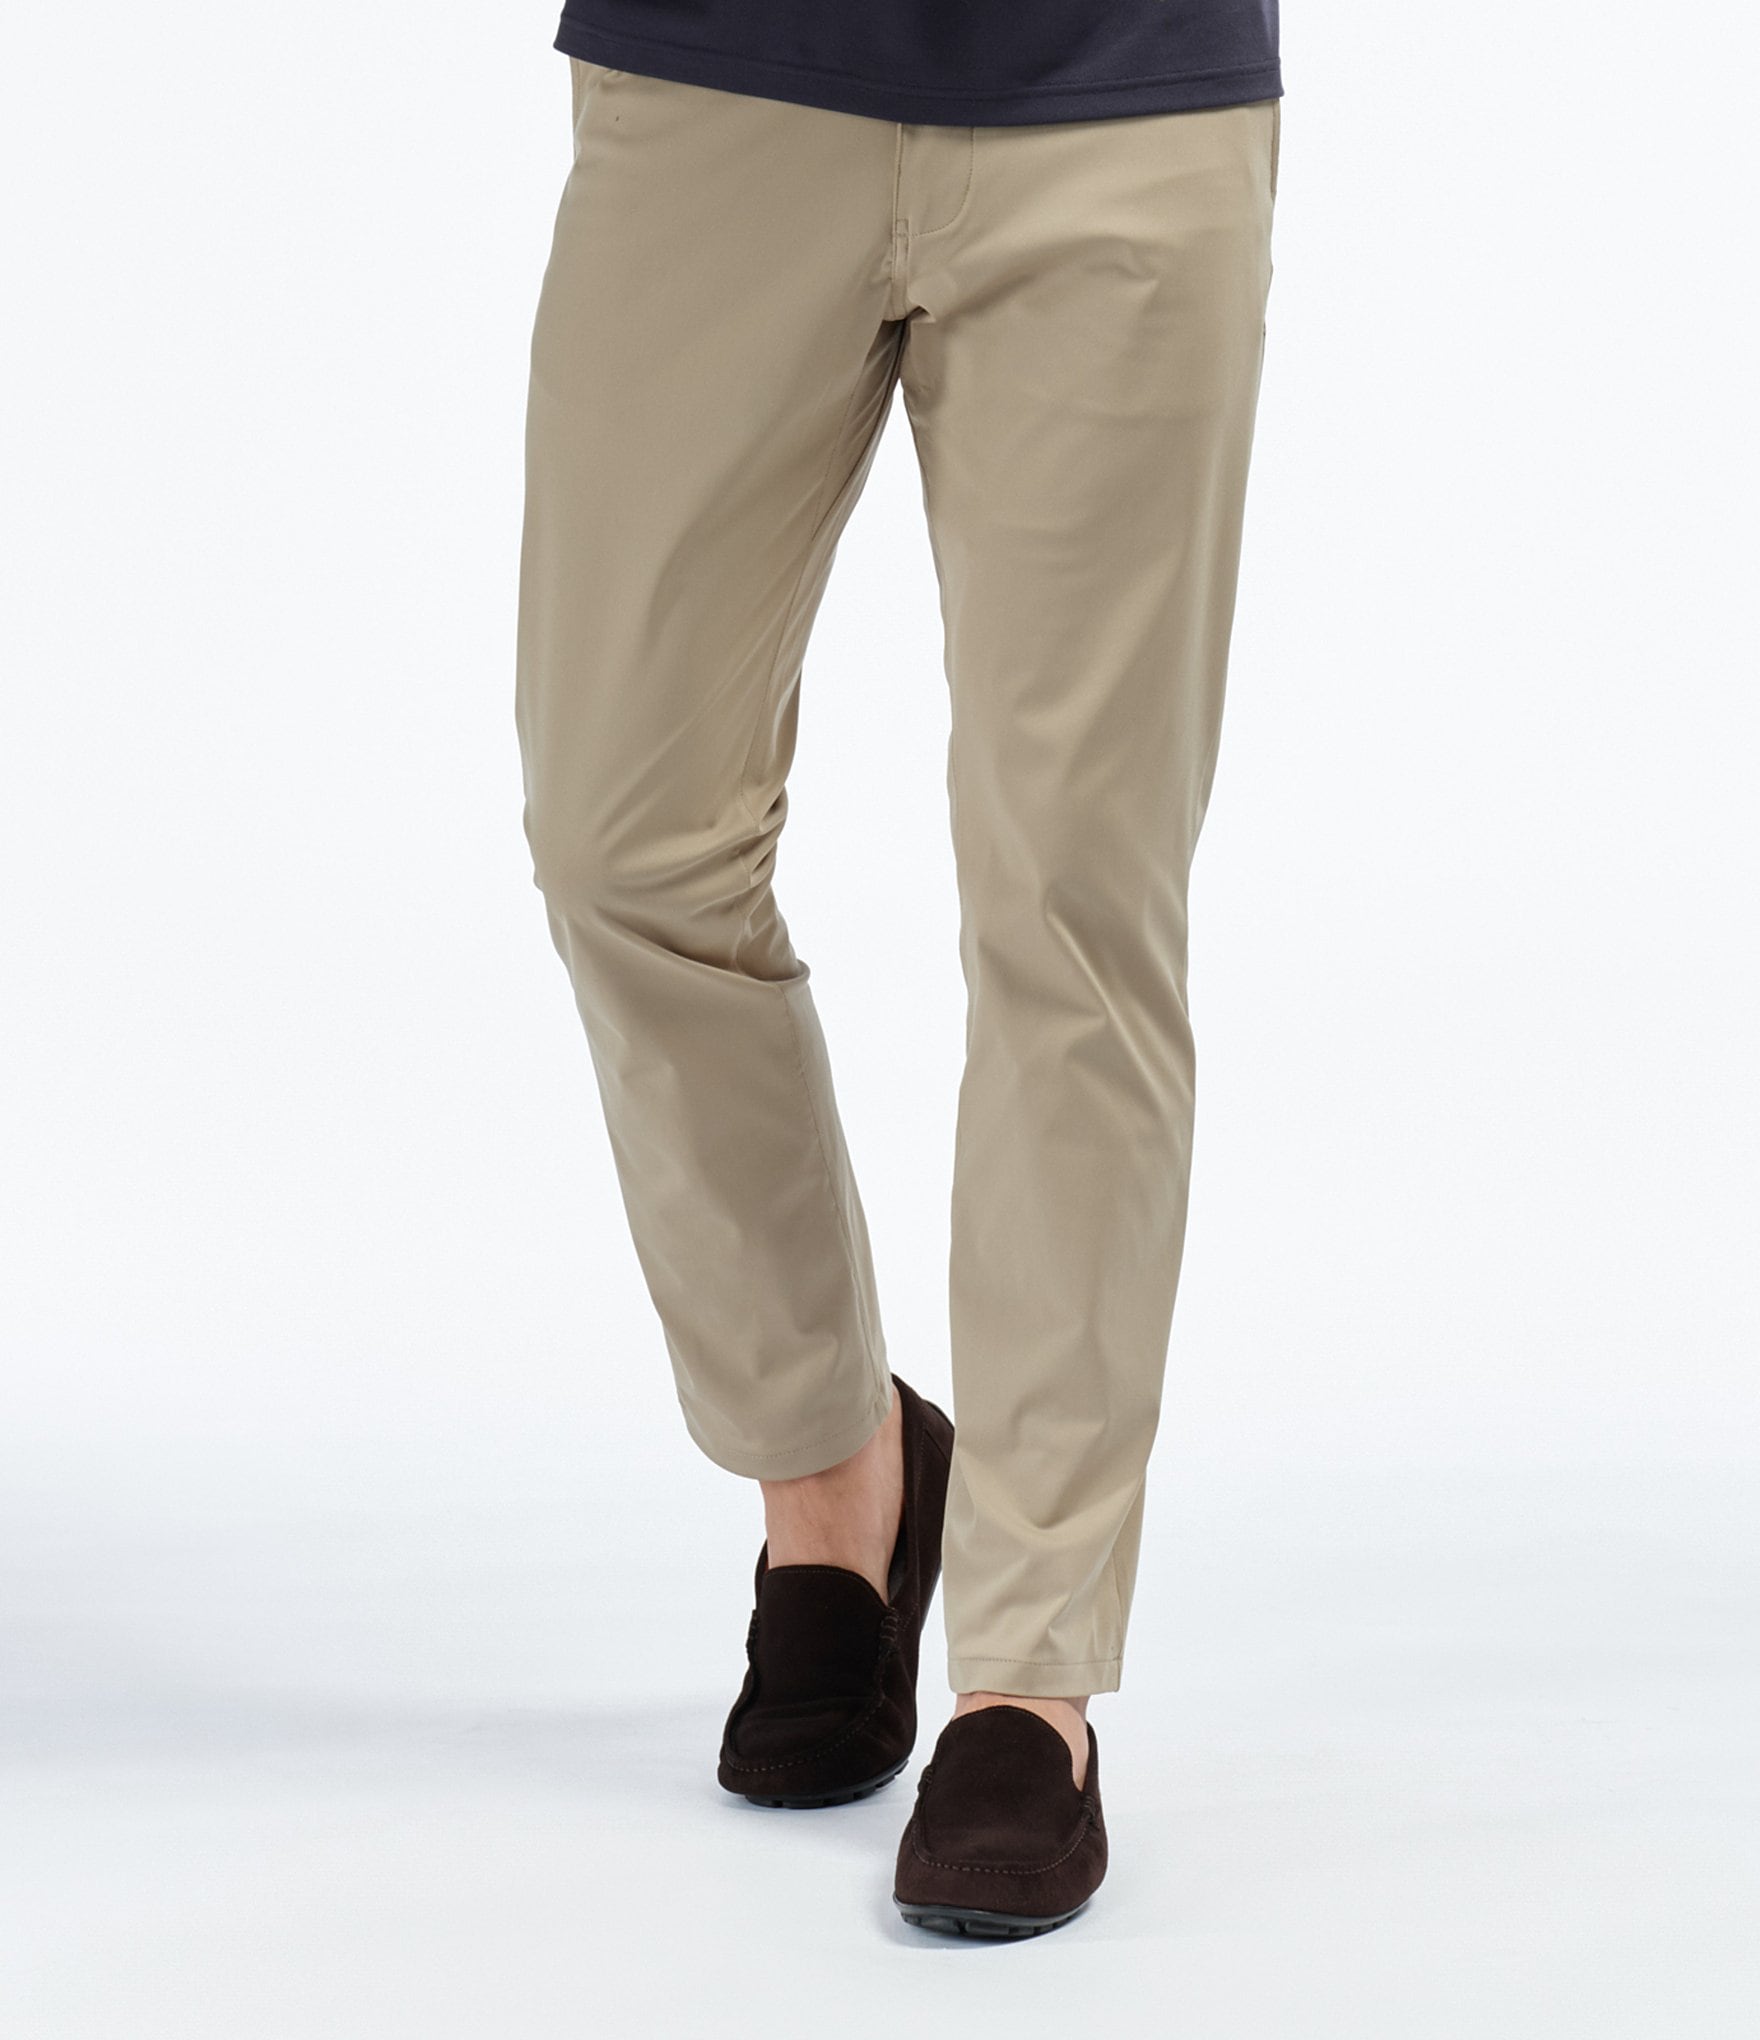 Sale & Clearance Men's Pants: Dress Pants, Casual Pants | Dillard's